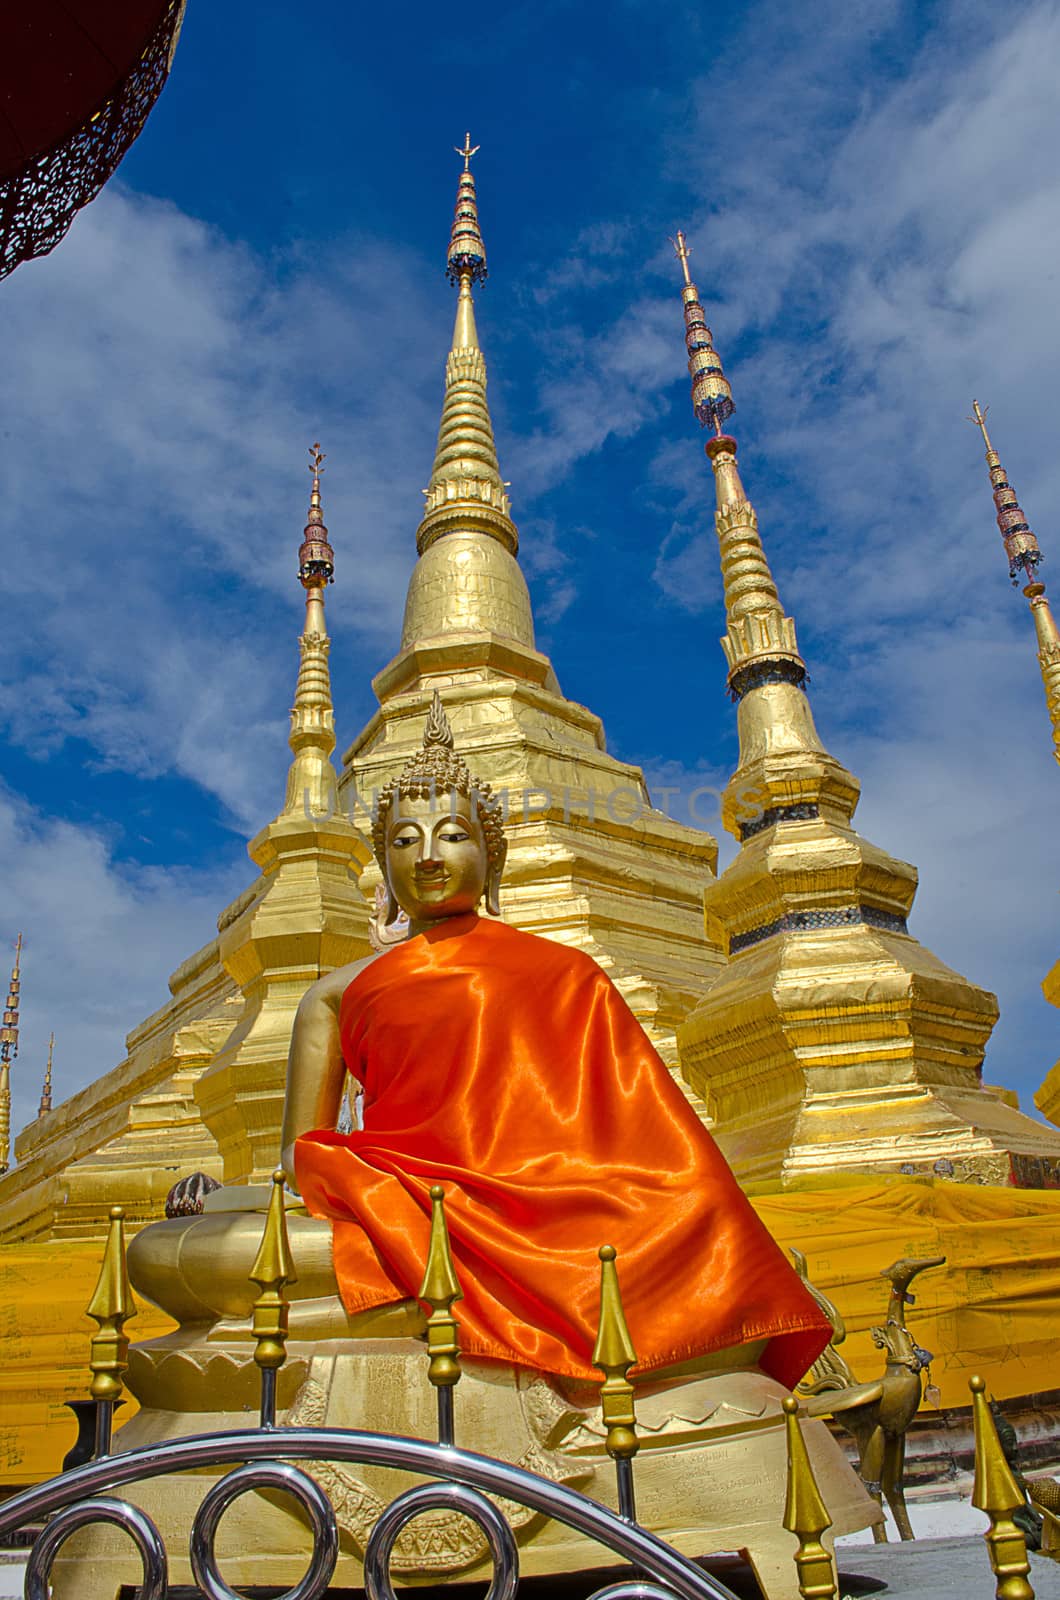 Gloden Seated Buddha Image with Golden Pagoda by kobfujar